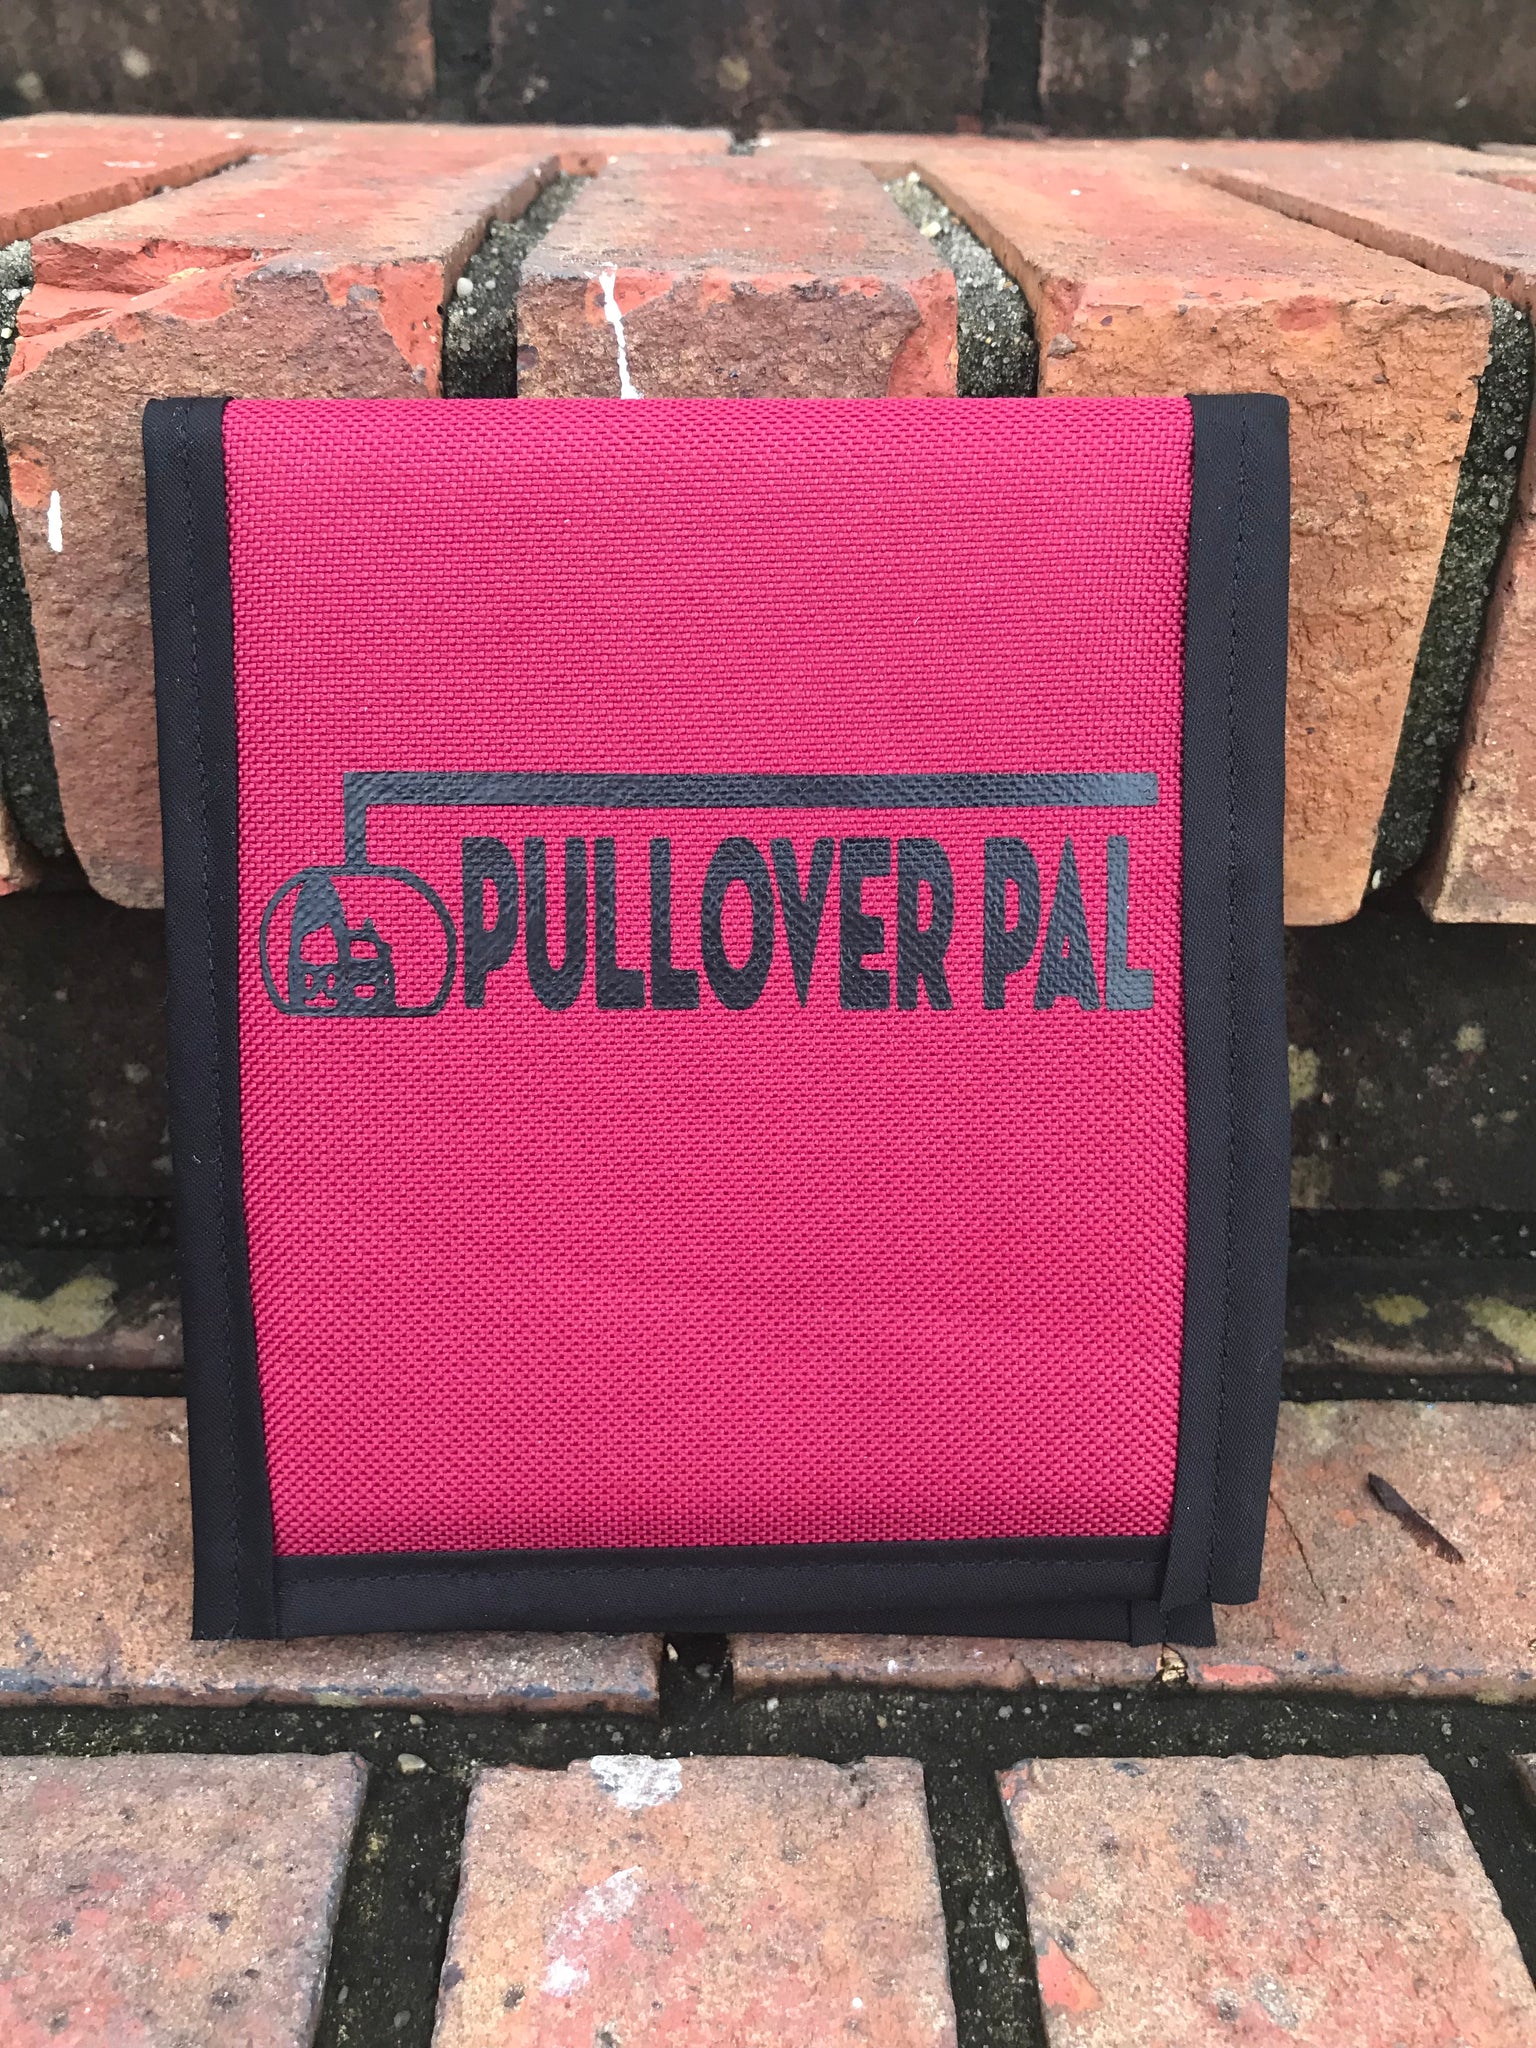 Pullover Pal Organizer - Burgundy and Black